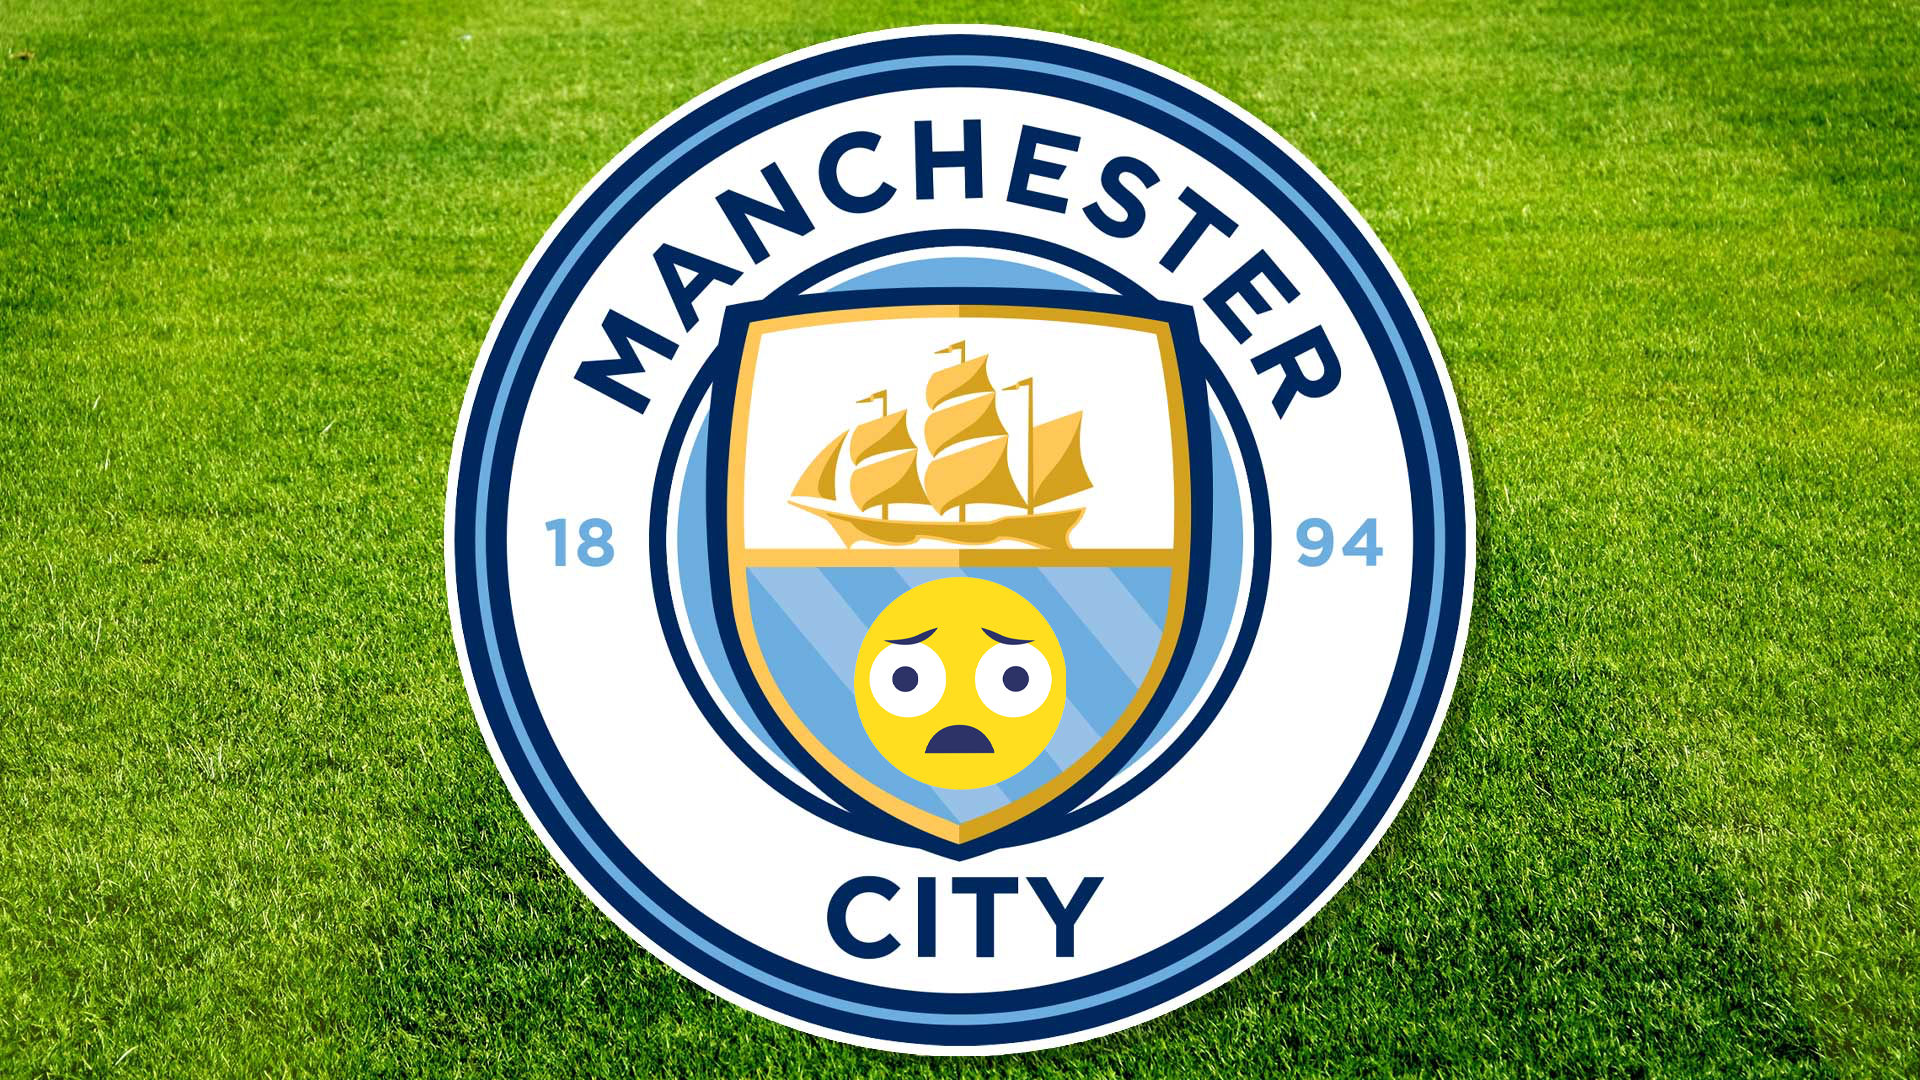 A Manchester City badge with a sad emoji